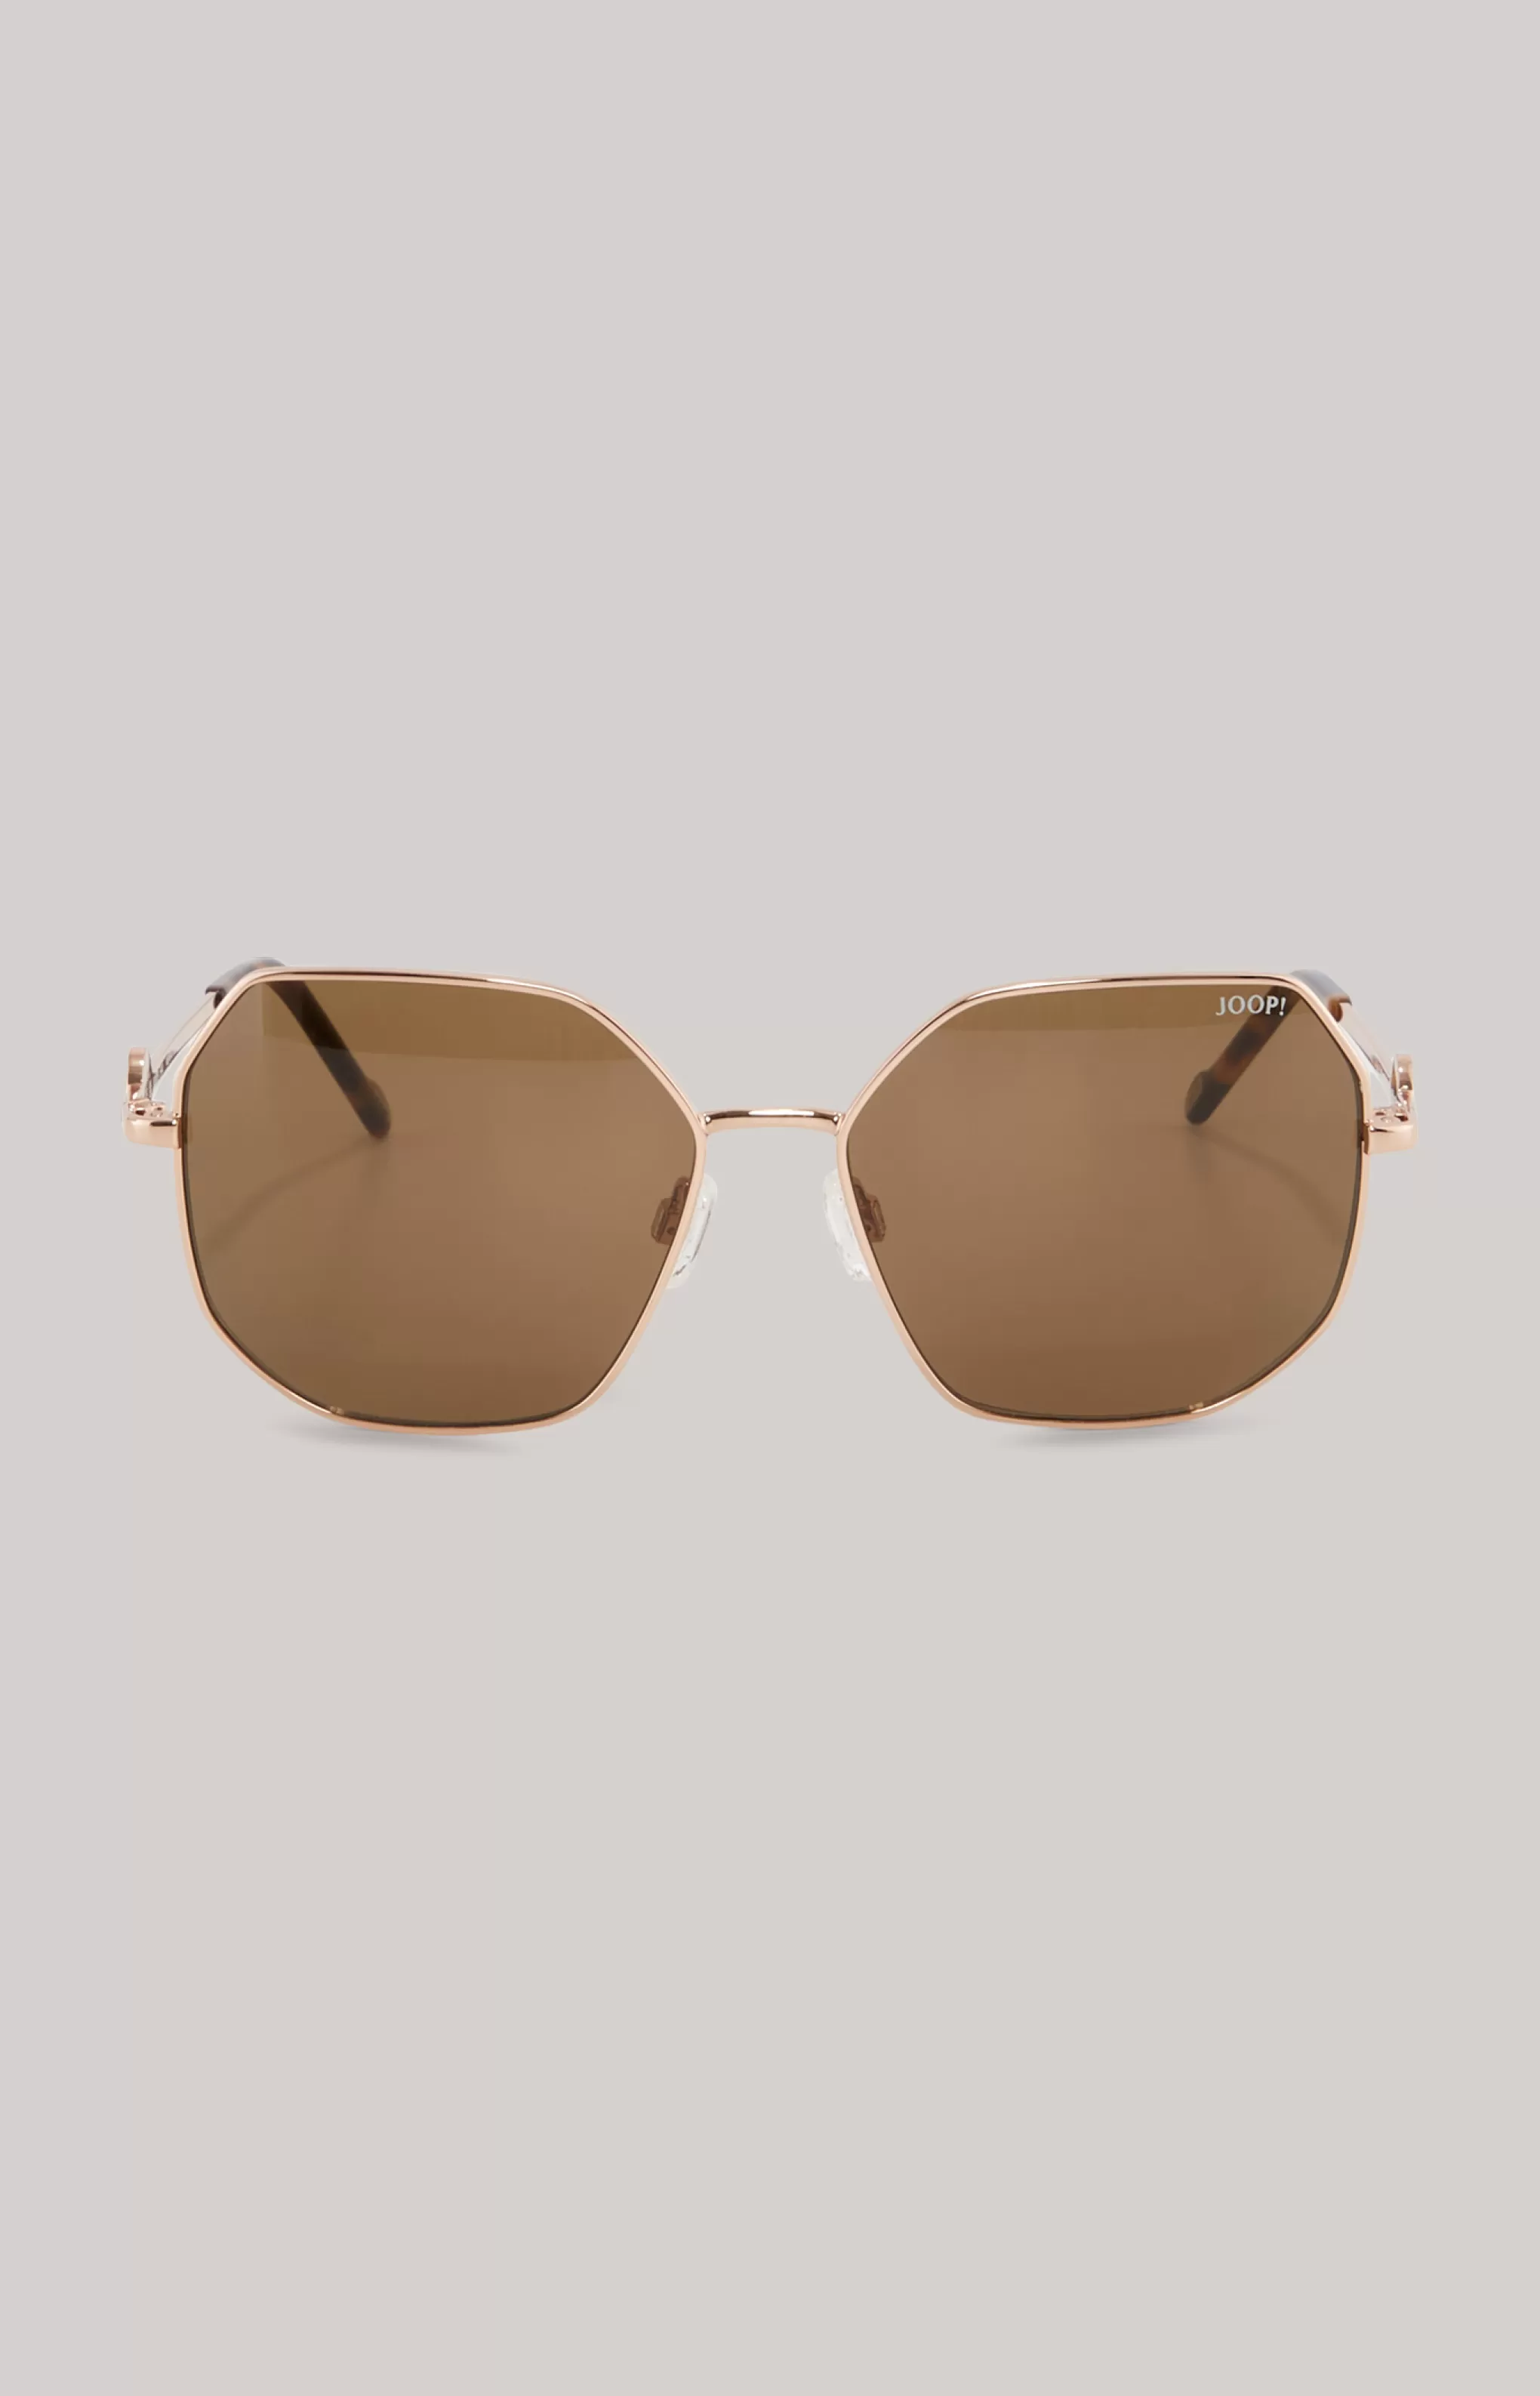 Sunglasses*JOOP Sunglasses Rosegold/brown sunglasses